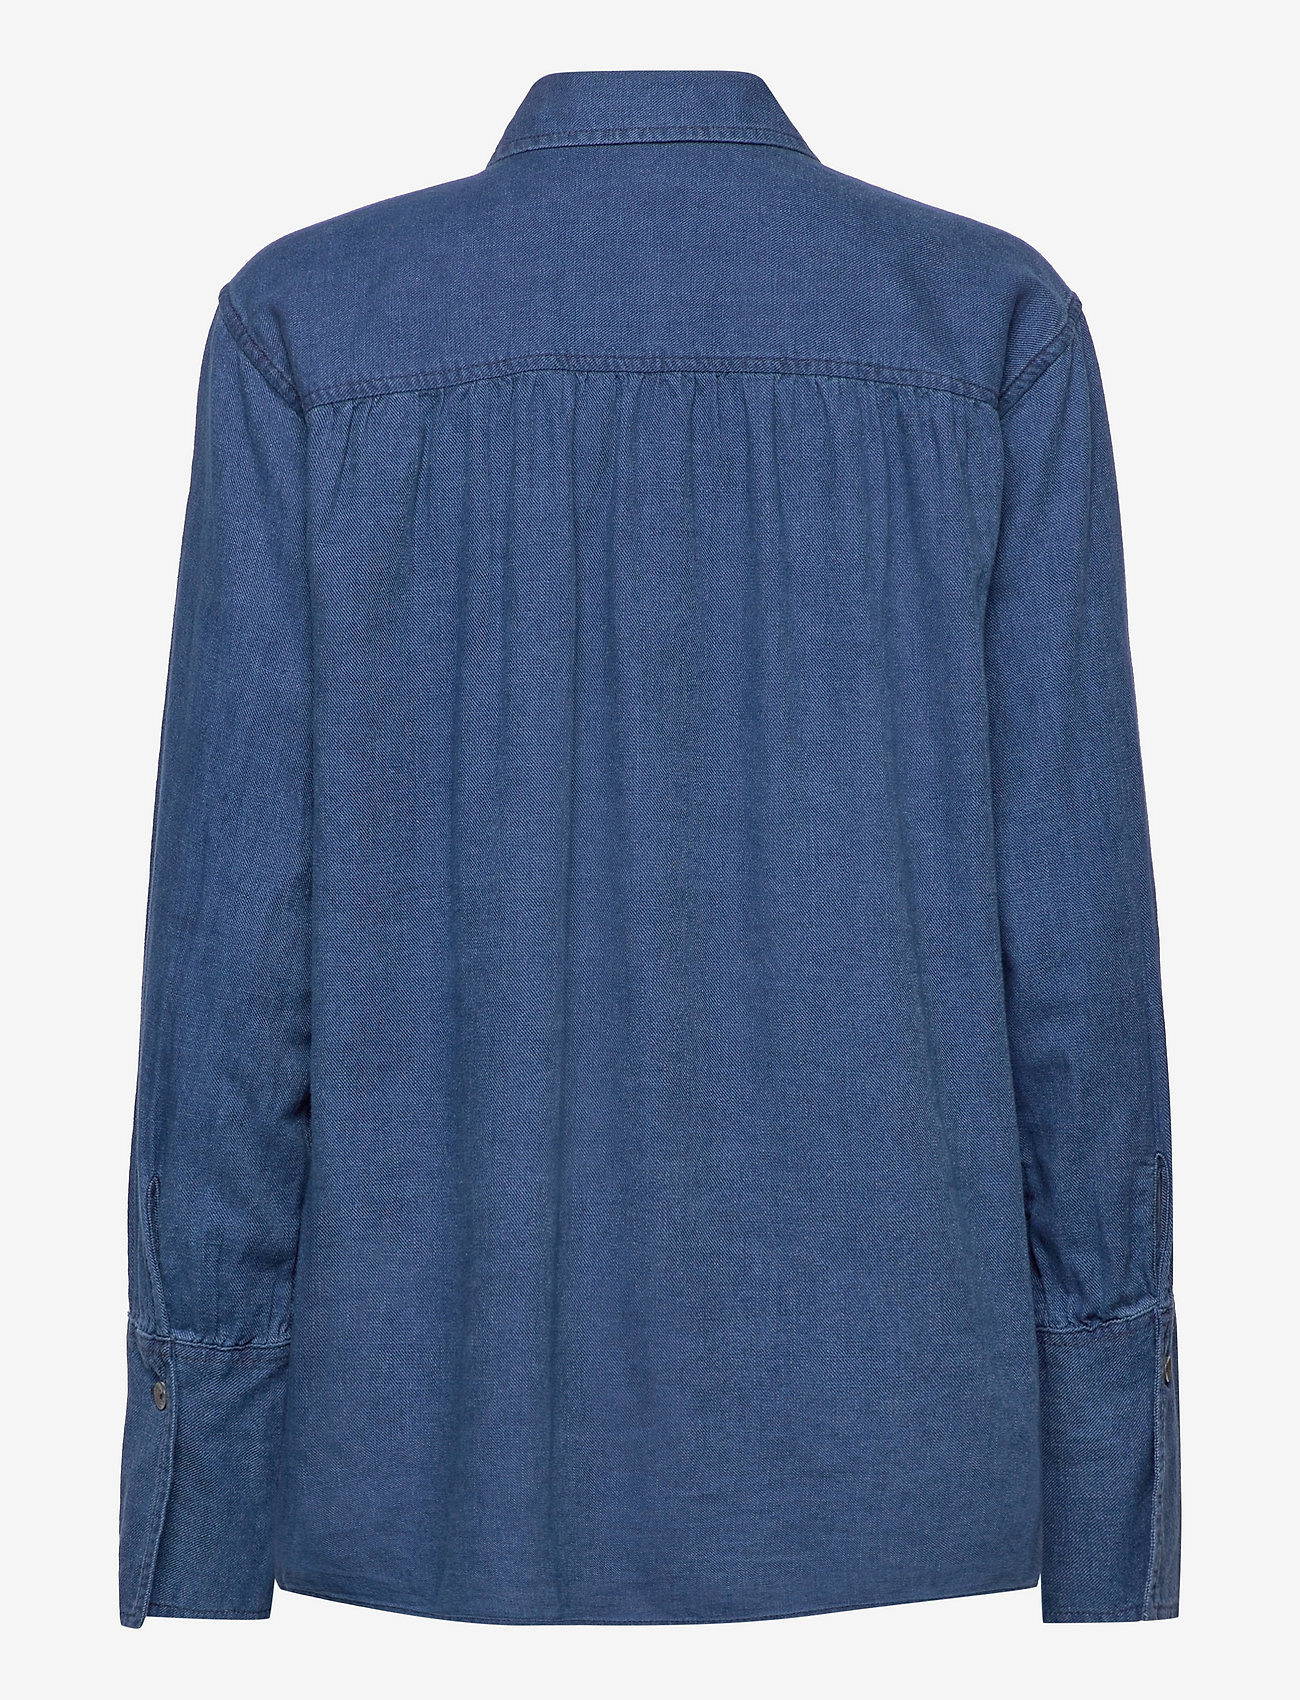 Closed - womens blouse - chemises en jeans - dark blue - 2